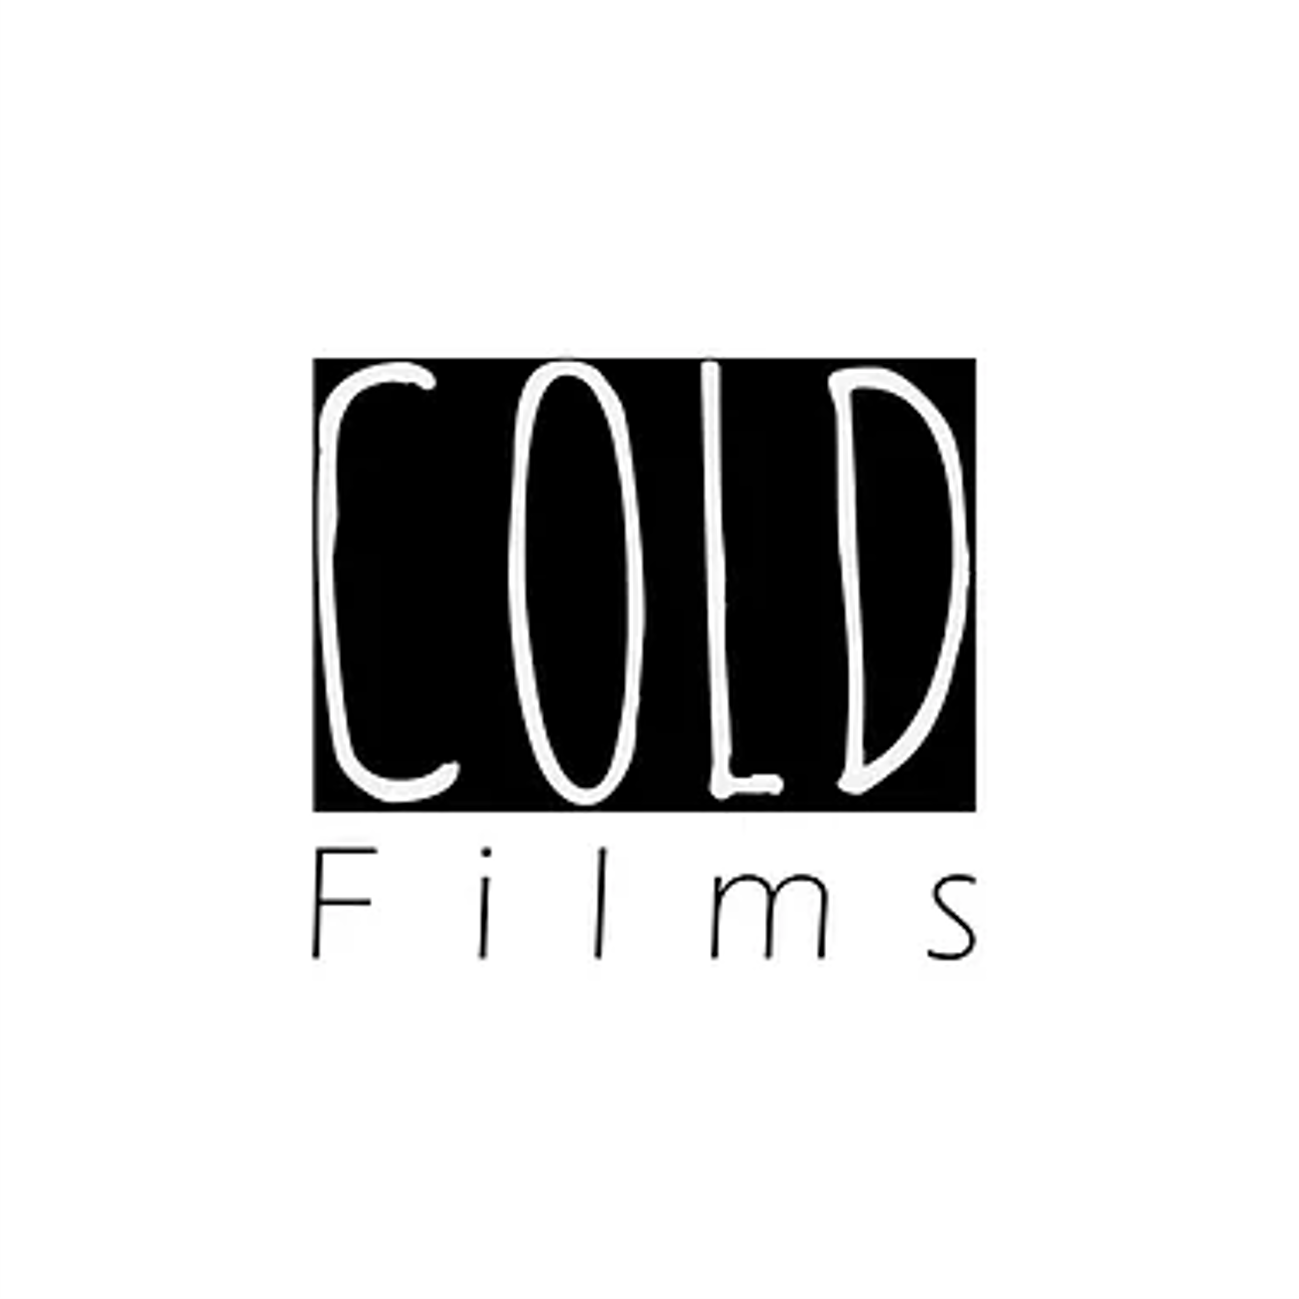 Cold Films is Capabel